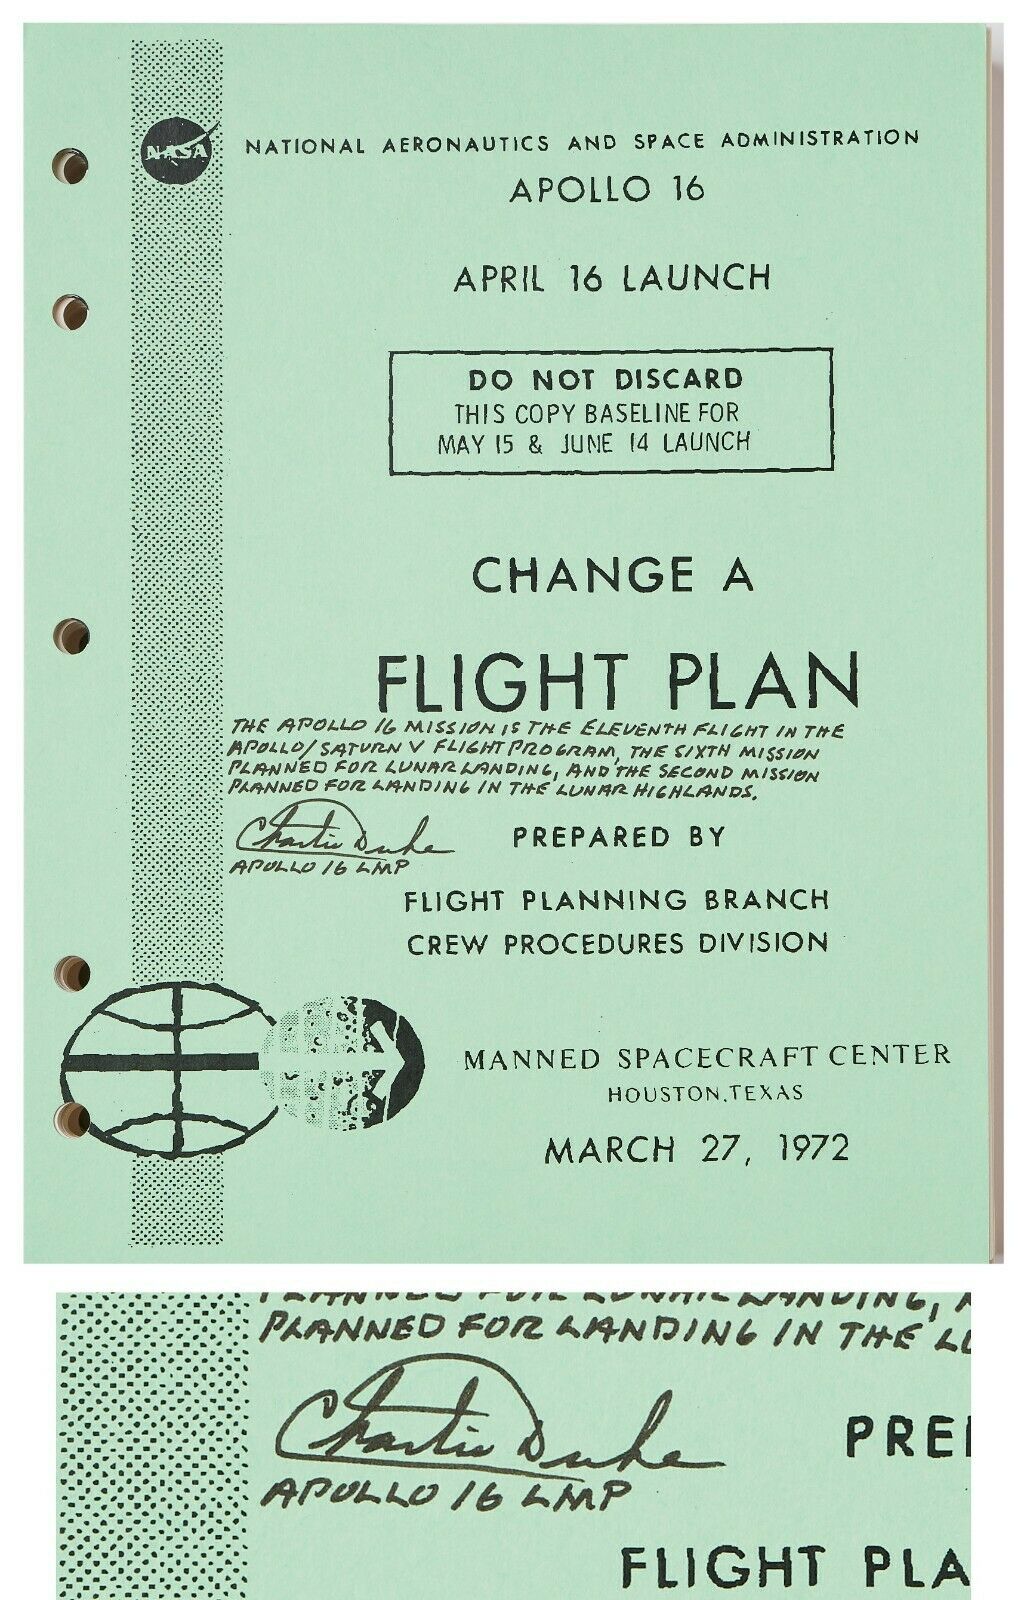 Charlie Duke Signed Copy Of The Apollo 16 Flight Plan